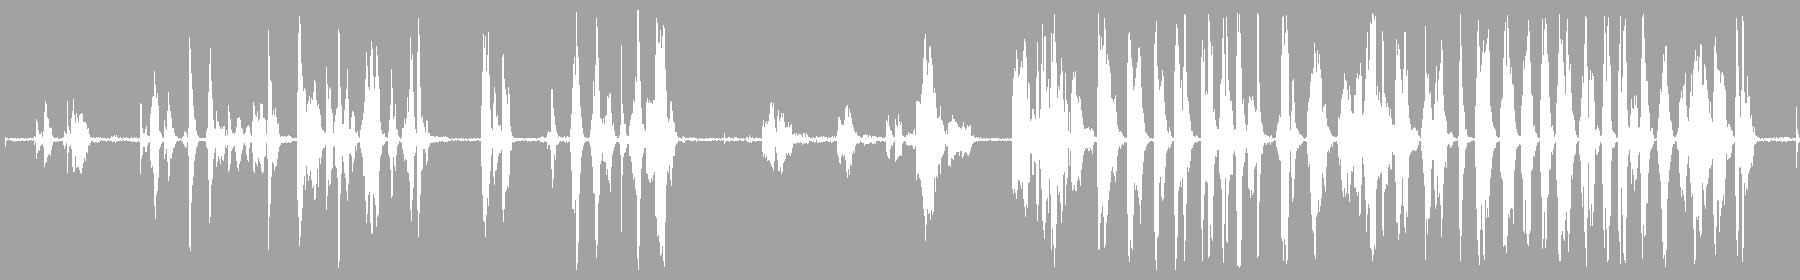 Rubygloom audio